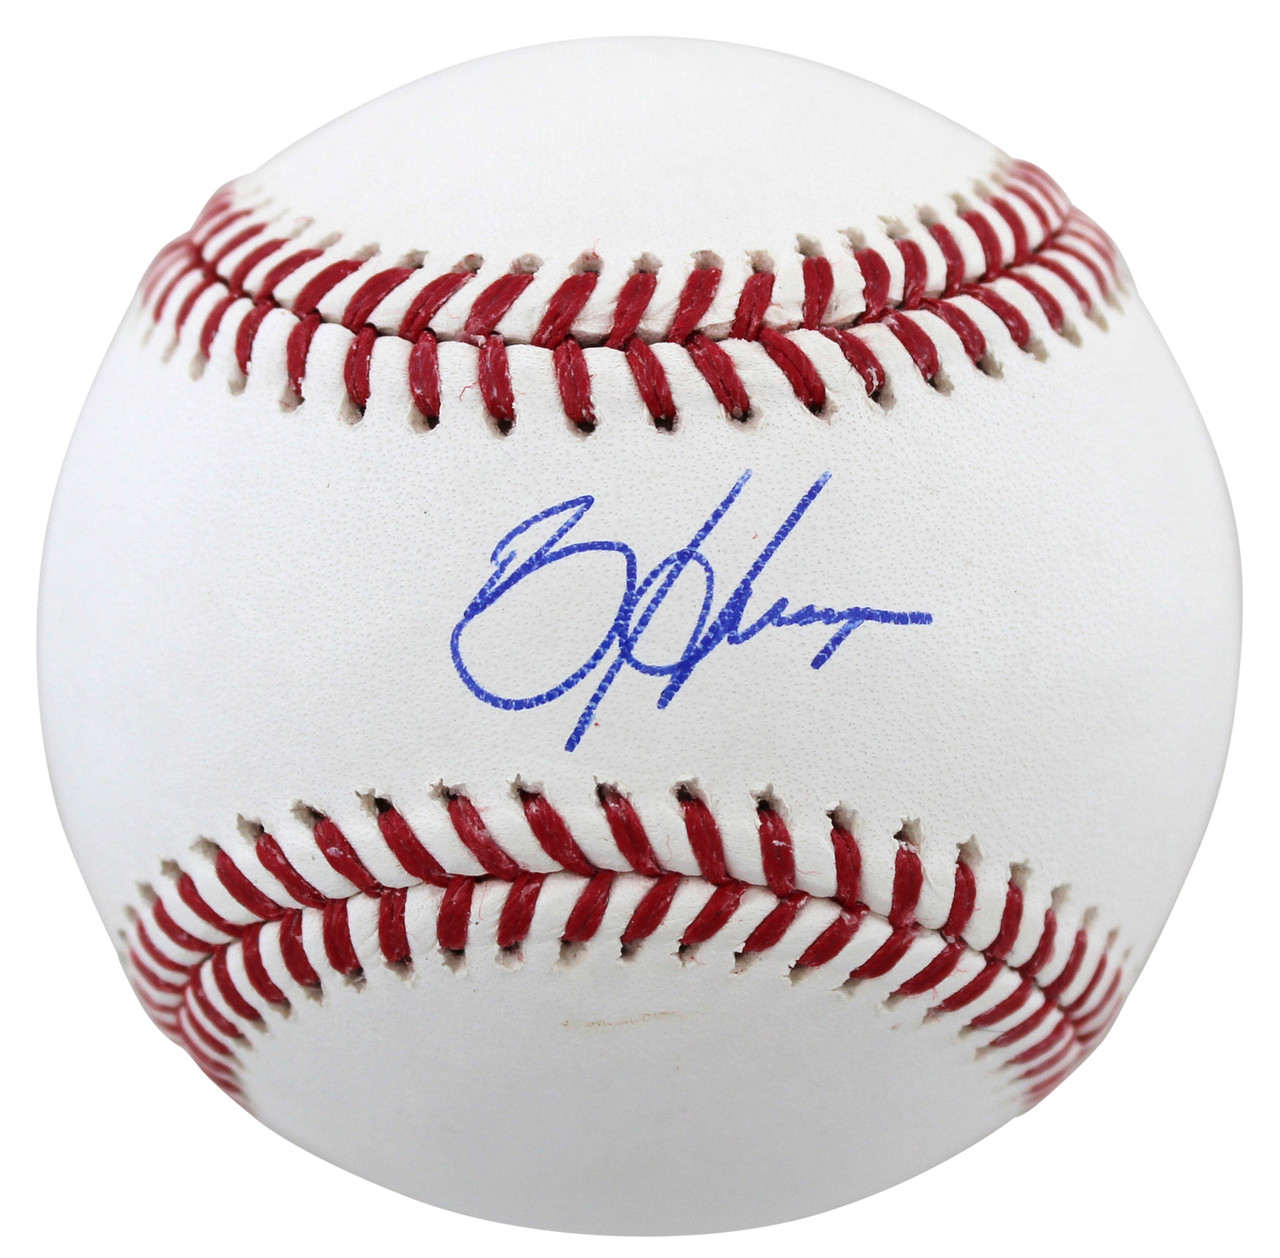 Bryce Harper Autographed Baseball